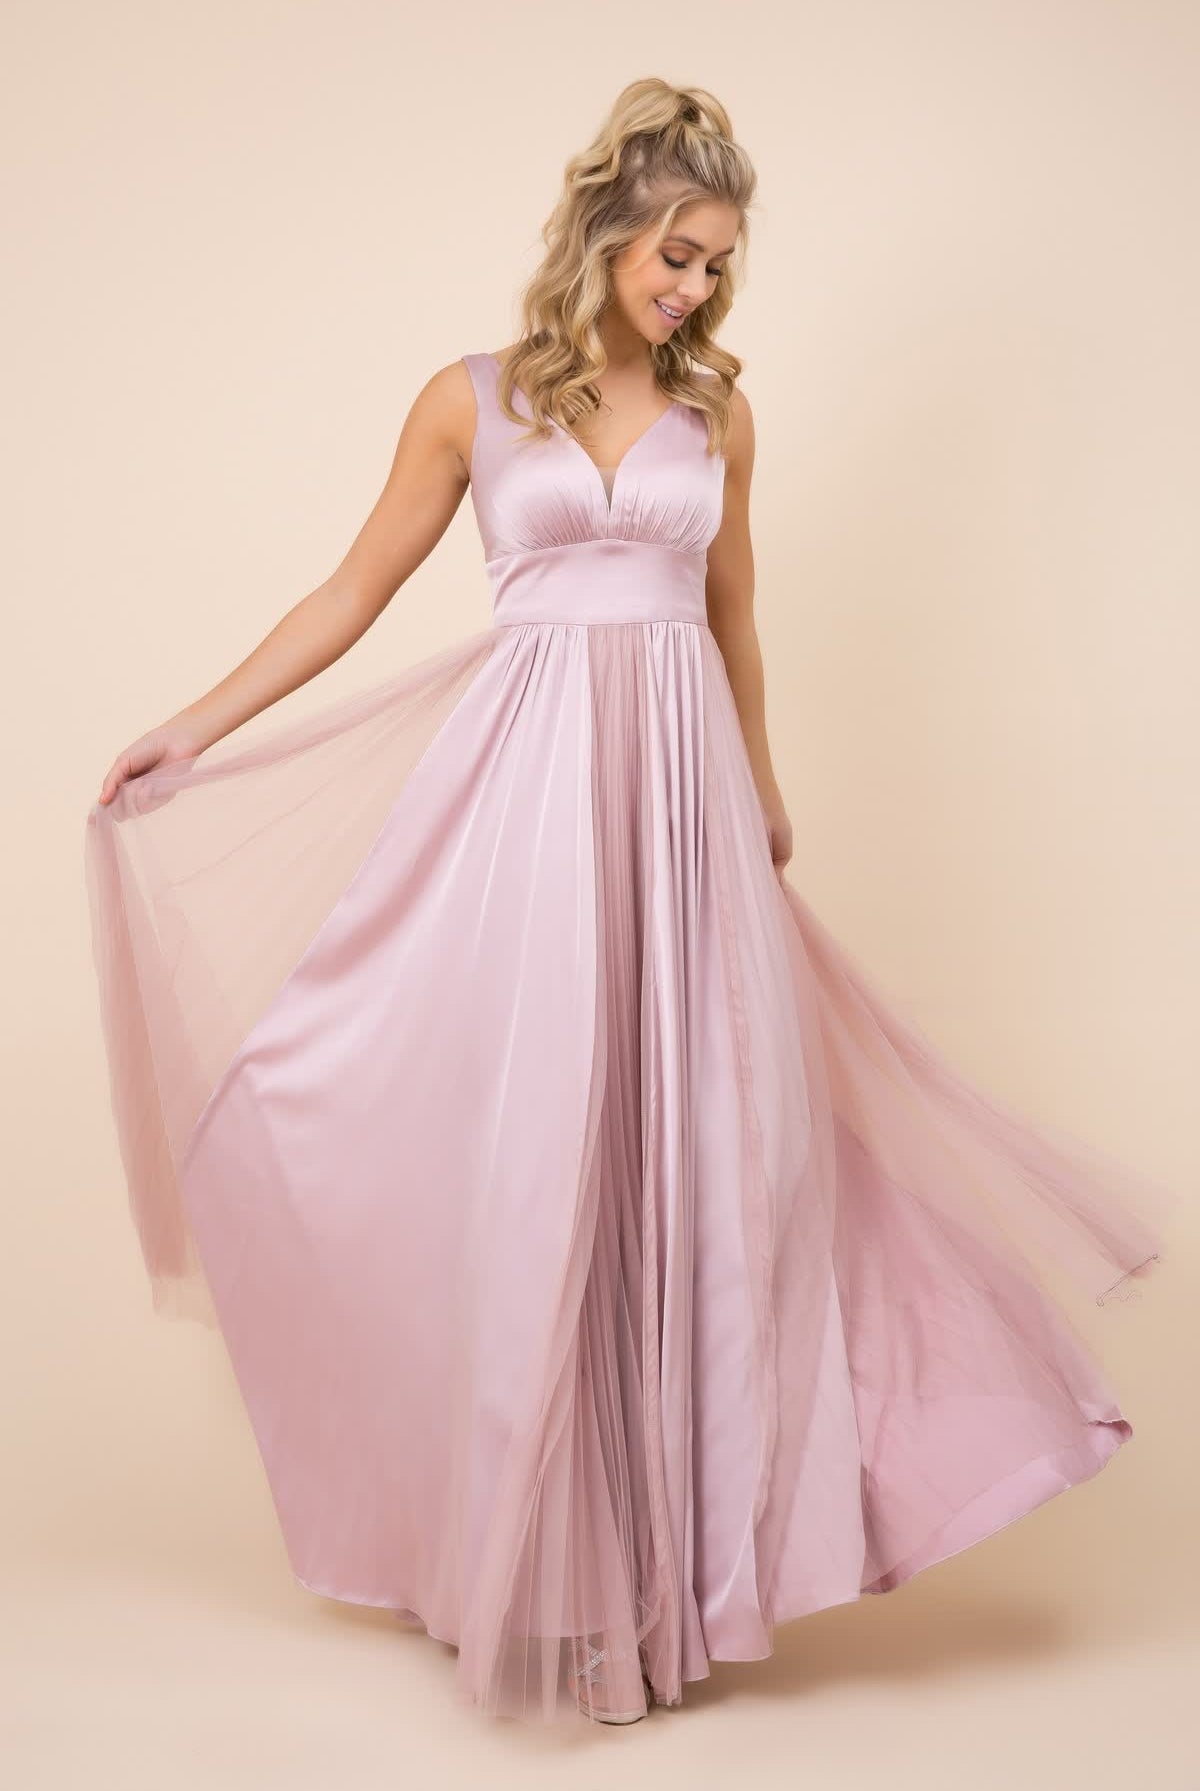 V-neck long tulle dress for evening & bridesmaids-smcdress